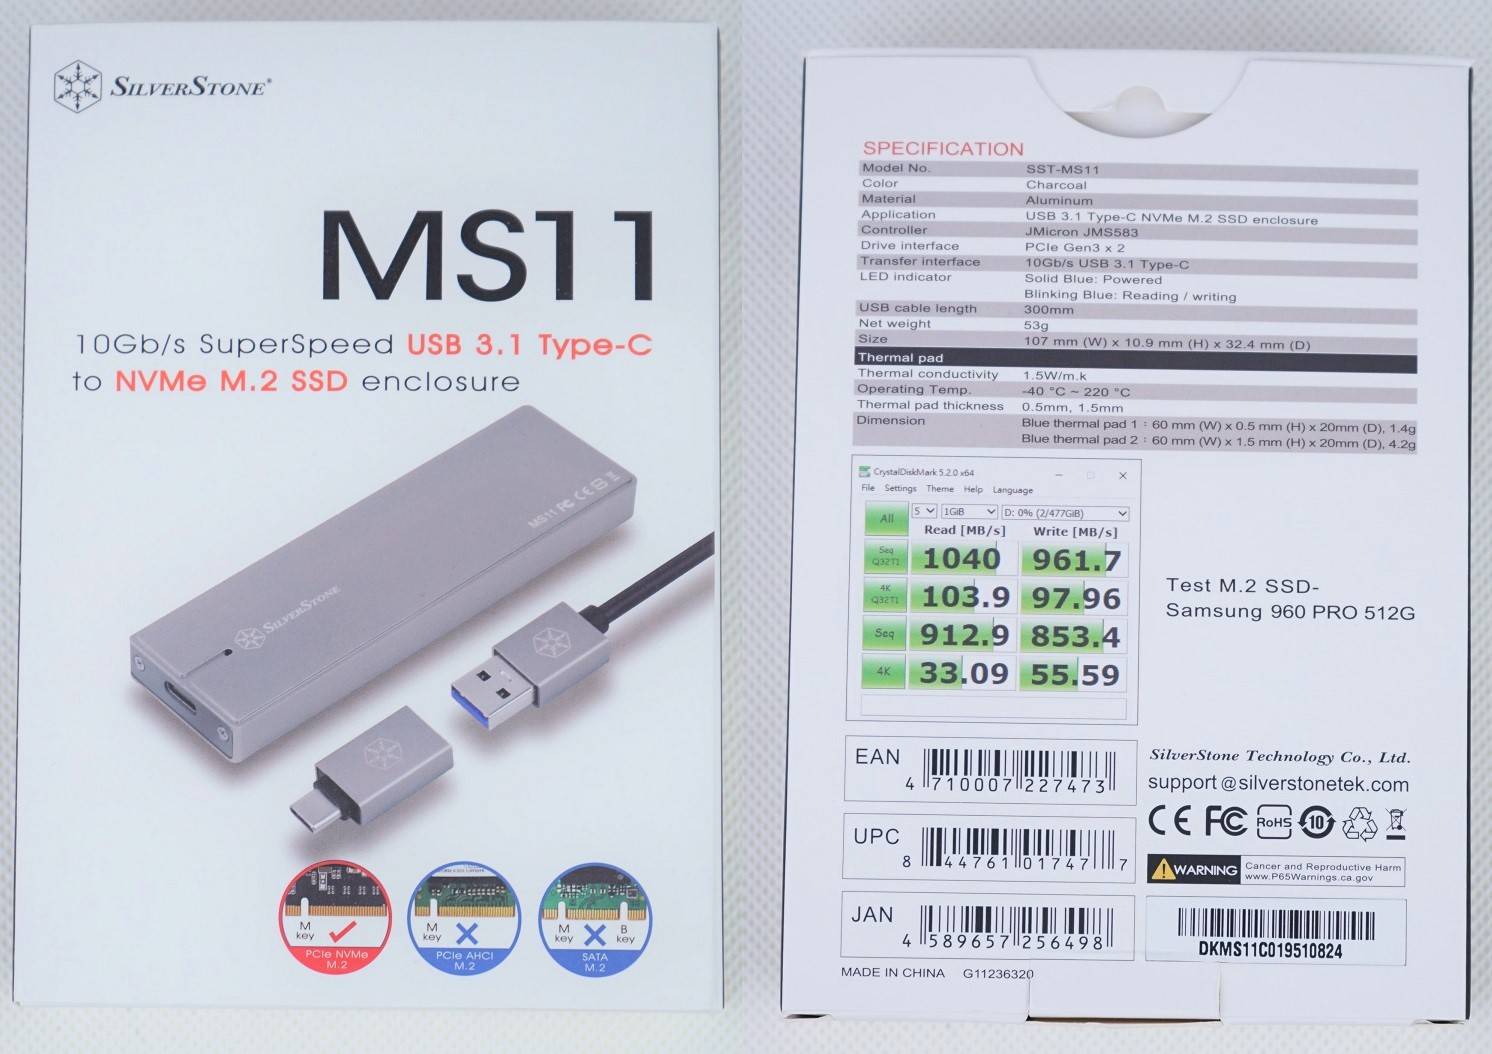 SilverStone MS11 External M.2 SSD Enclosure